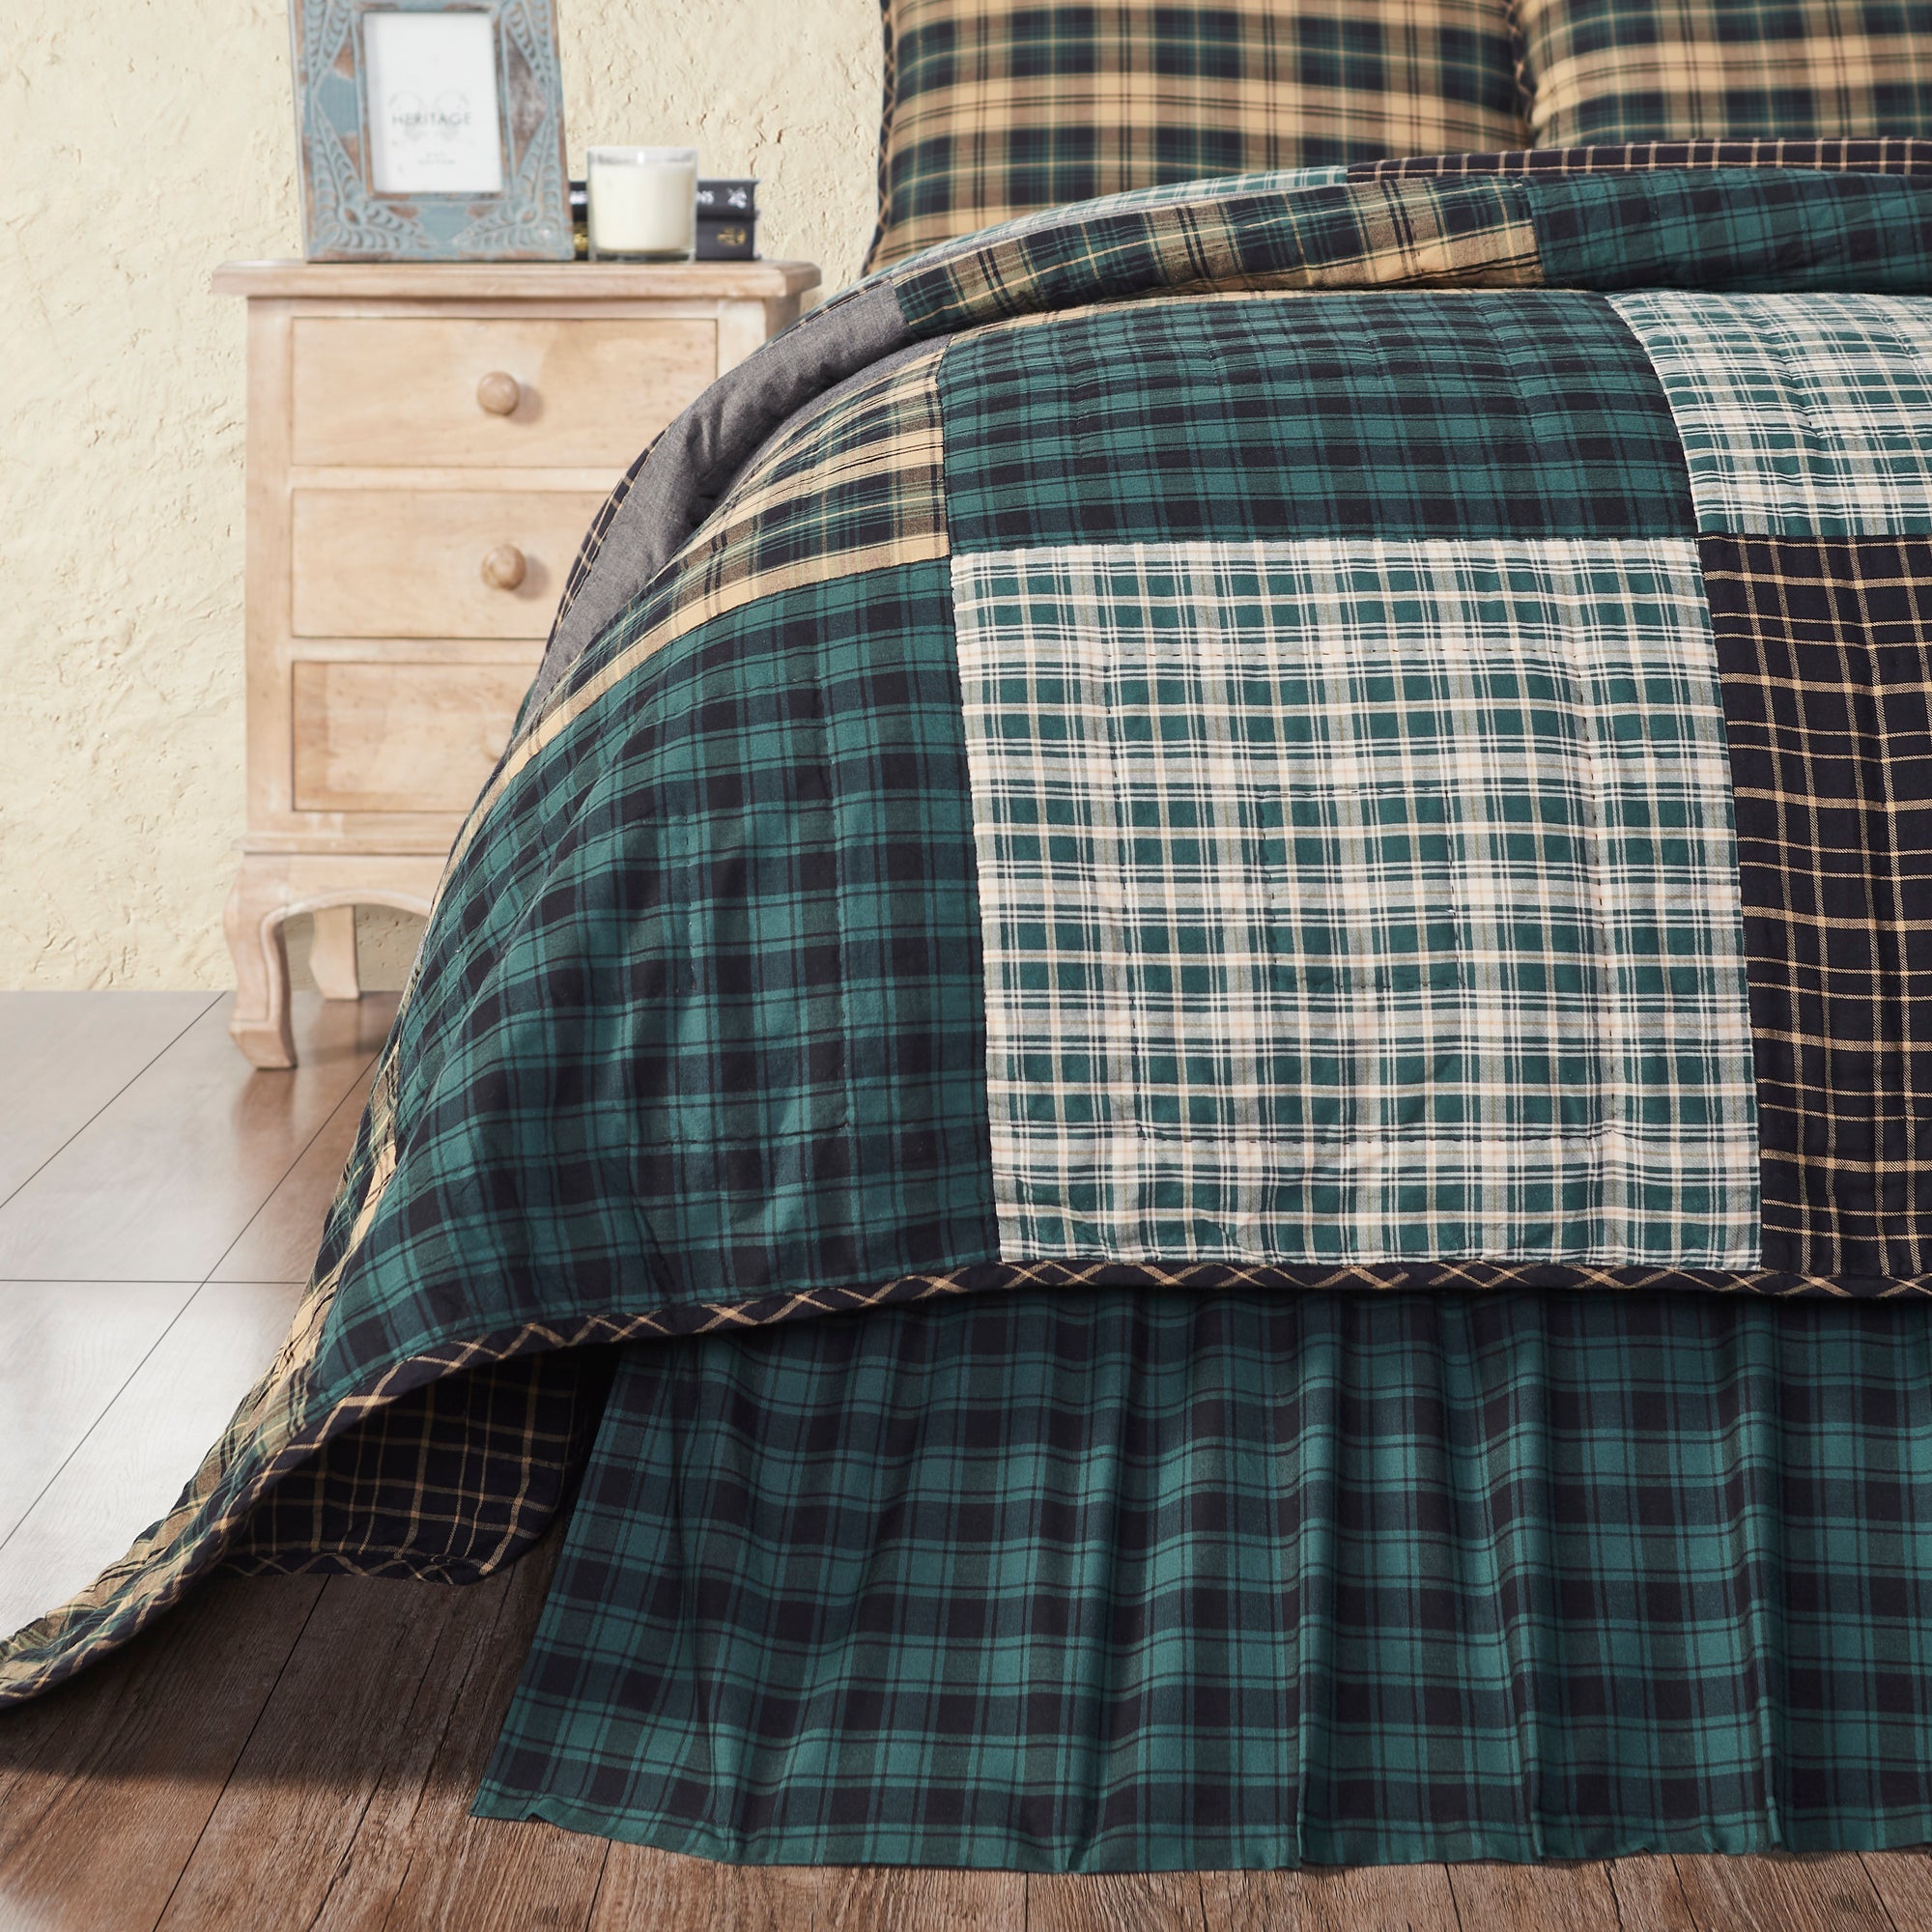 Pine Grove Queen Bed Skirt 60x80x16 VHC Brands